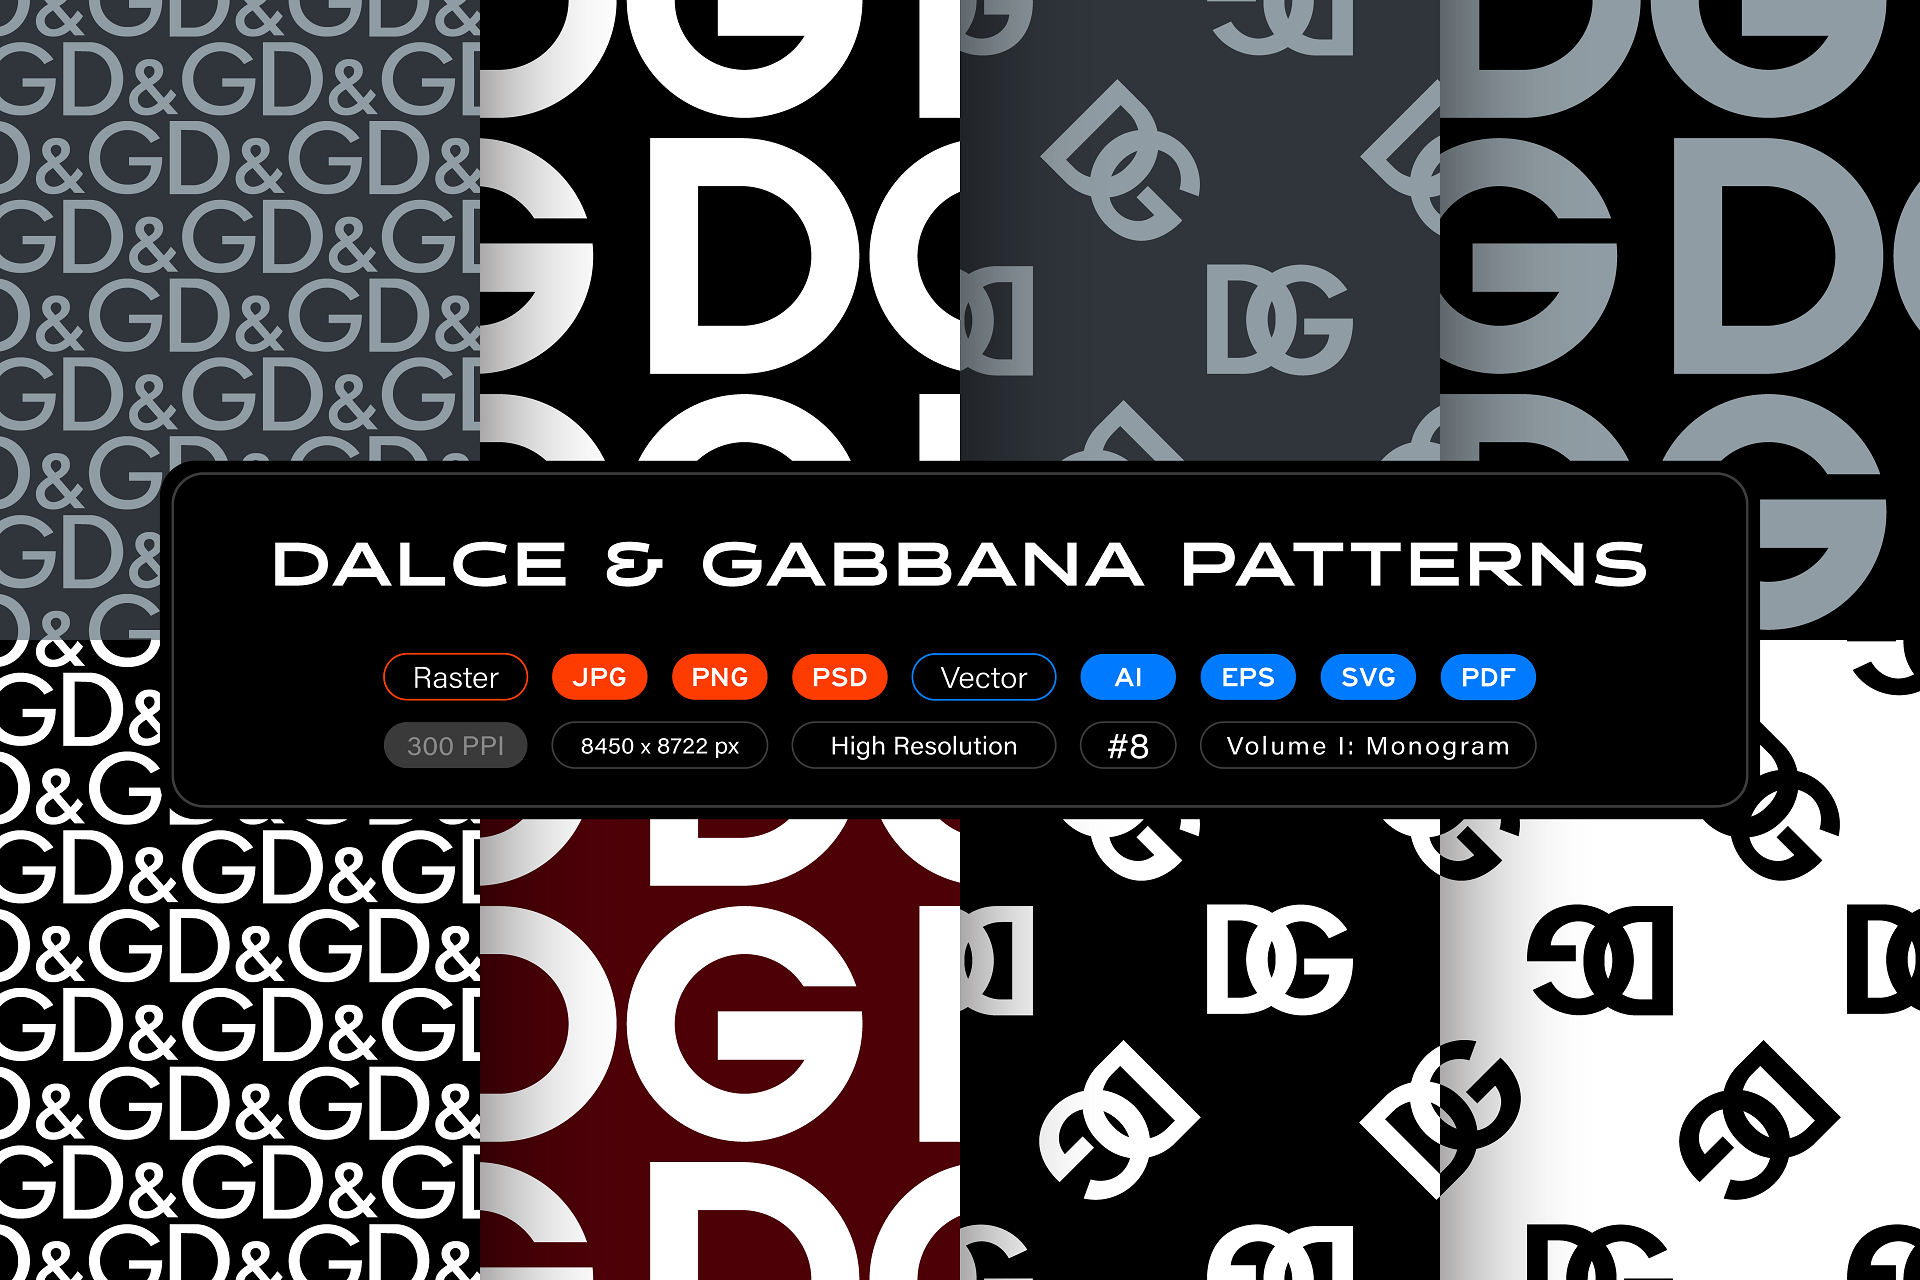 Dalce and Gabbana Patterns, Vol. 1: Monogram by itsfarahbakhsh on DeviantArt